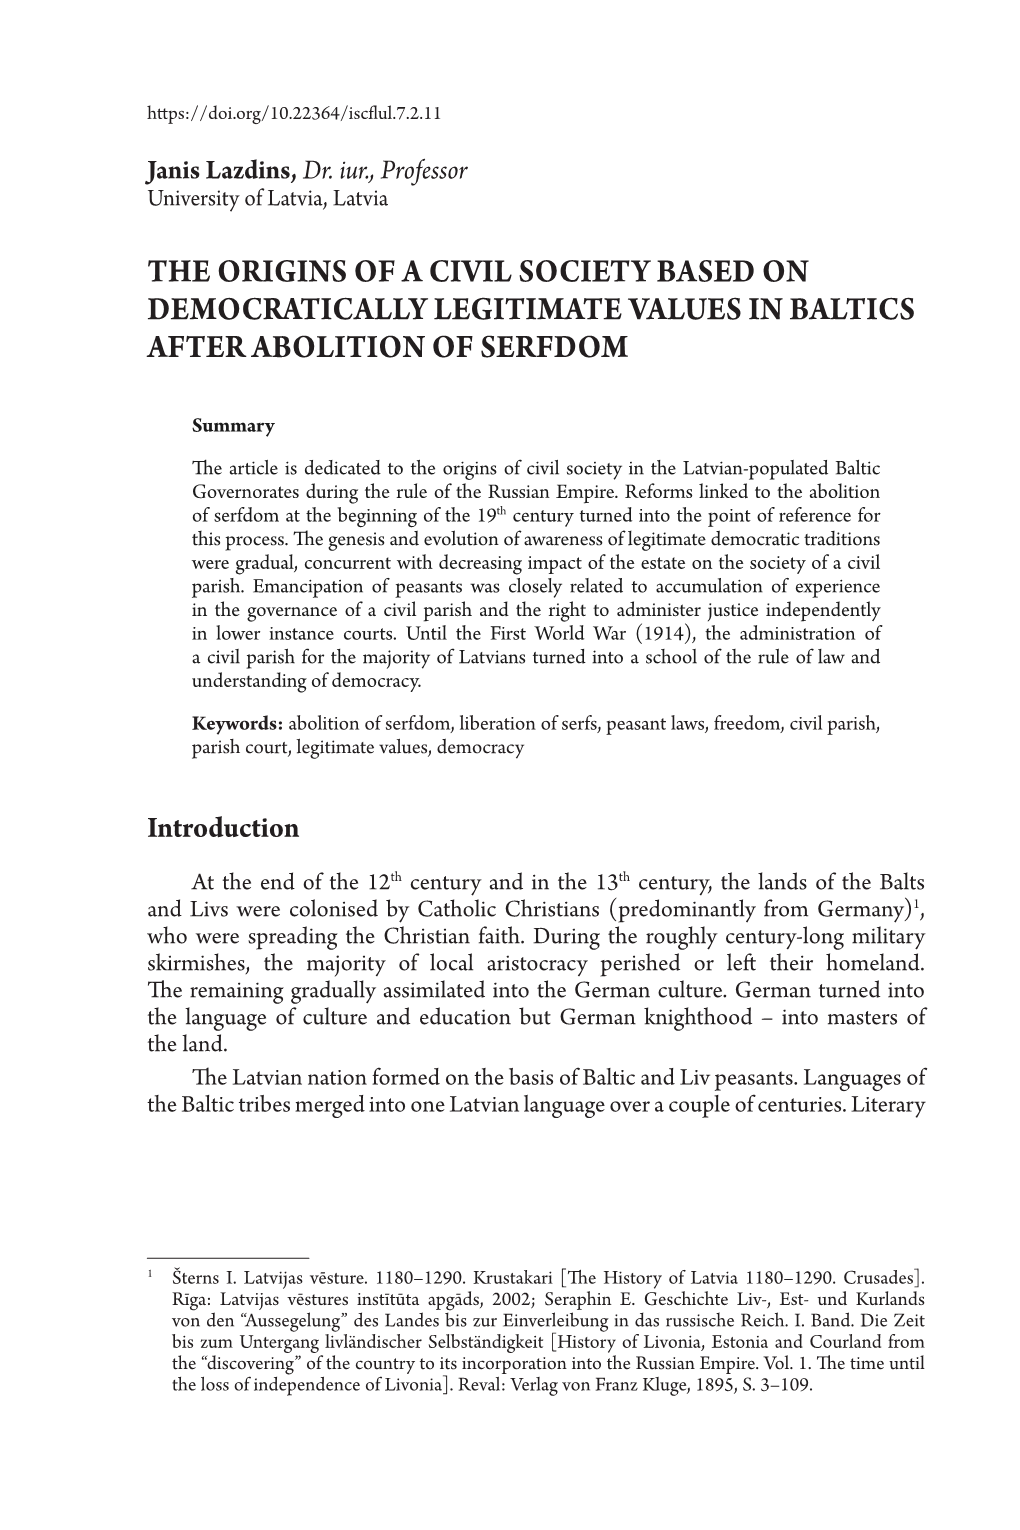 The Origins of a Civil Society Based on Democratically Legitimate Values